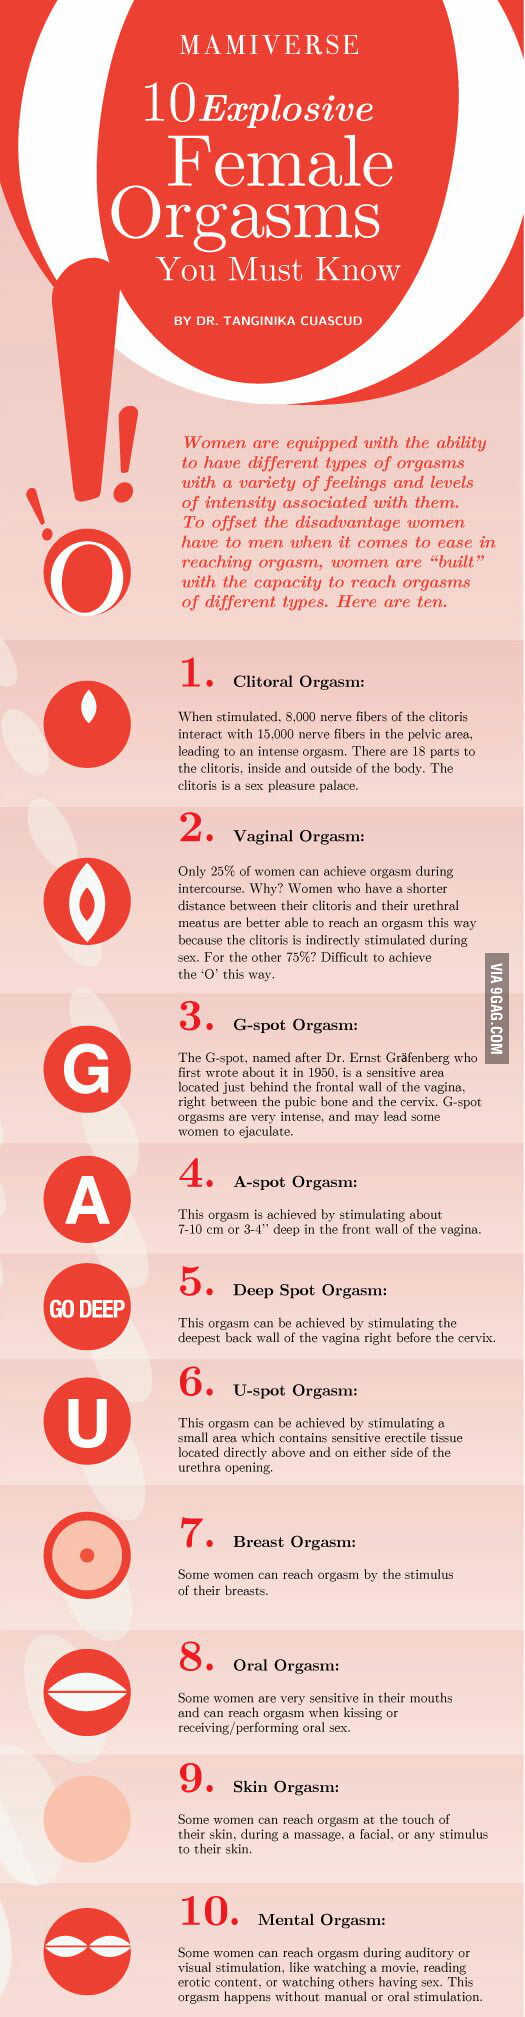 Ways to make females orgasm